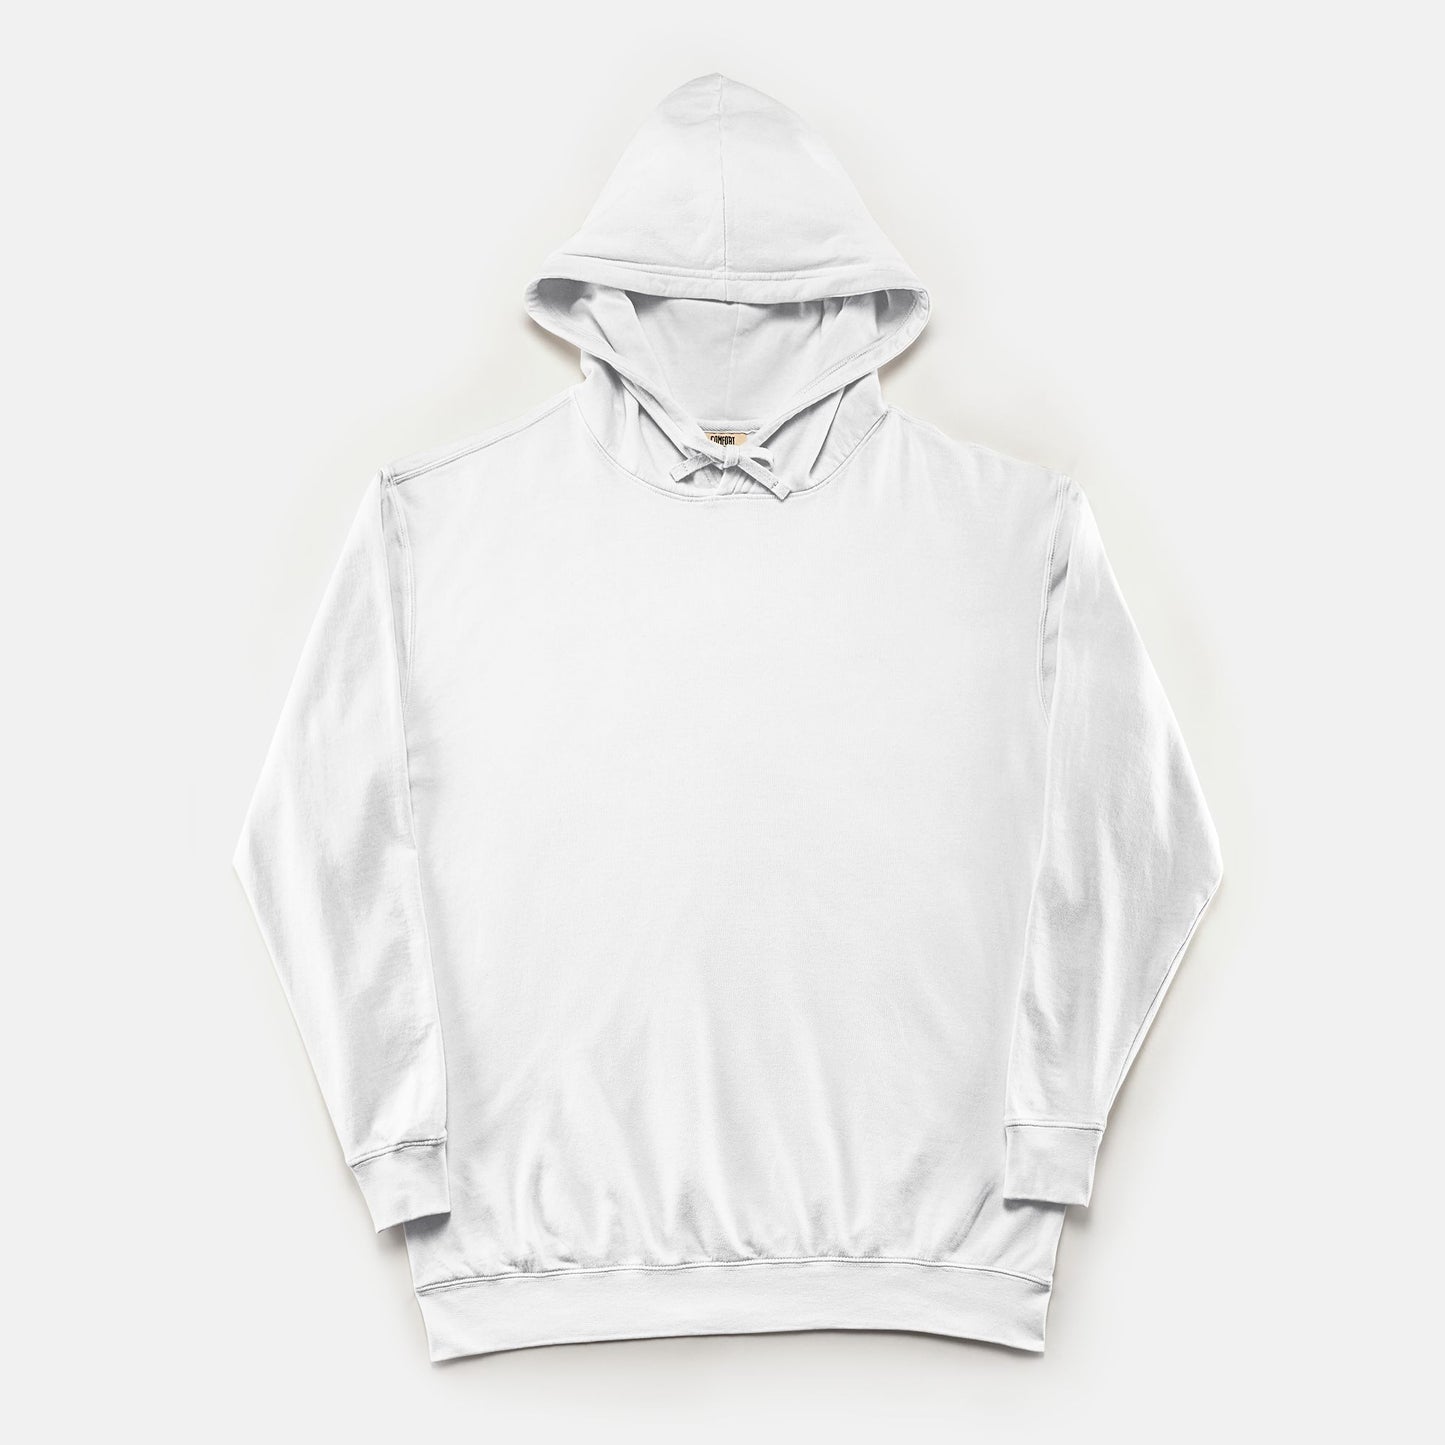 Something Wicked Club Comfort Color Lightweight Hooded Sweatshirt 1467